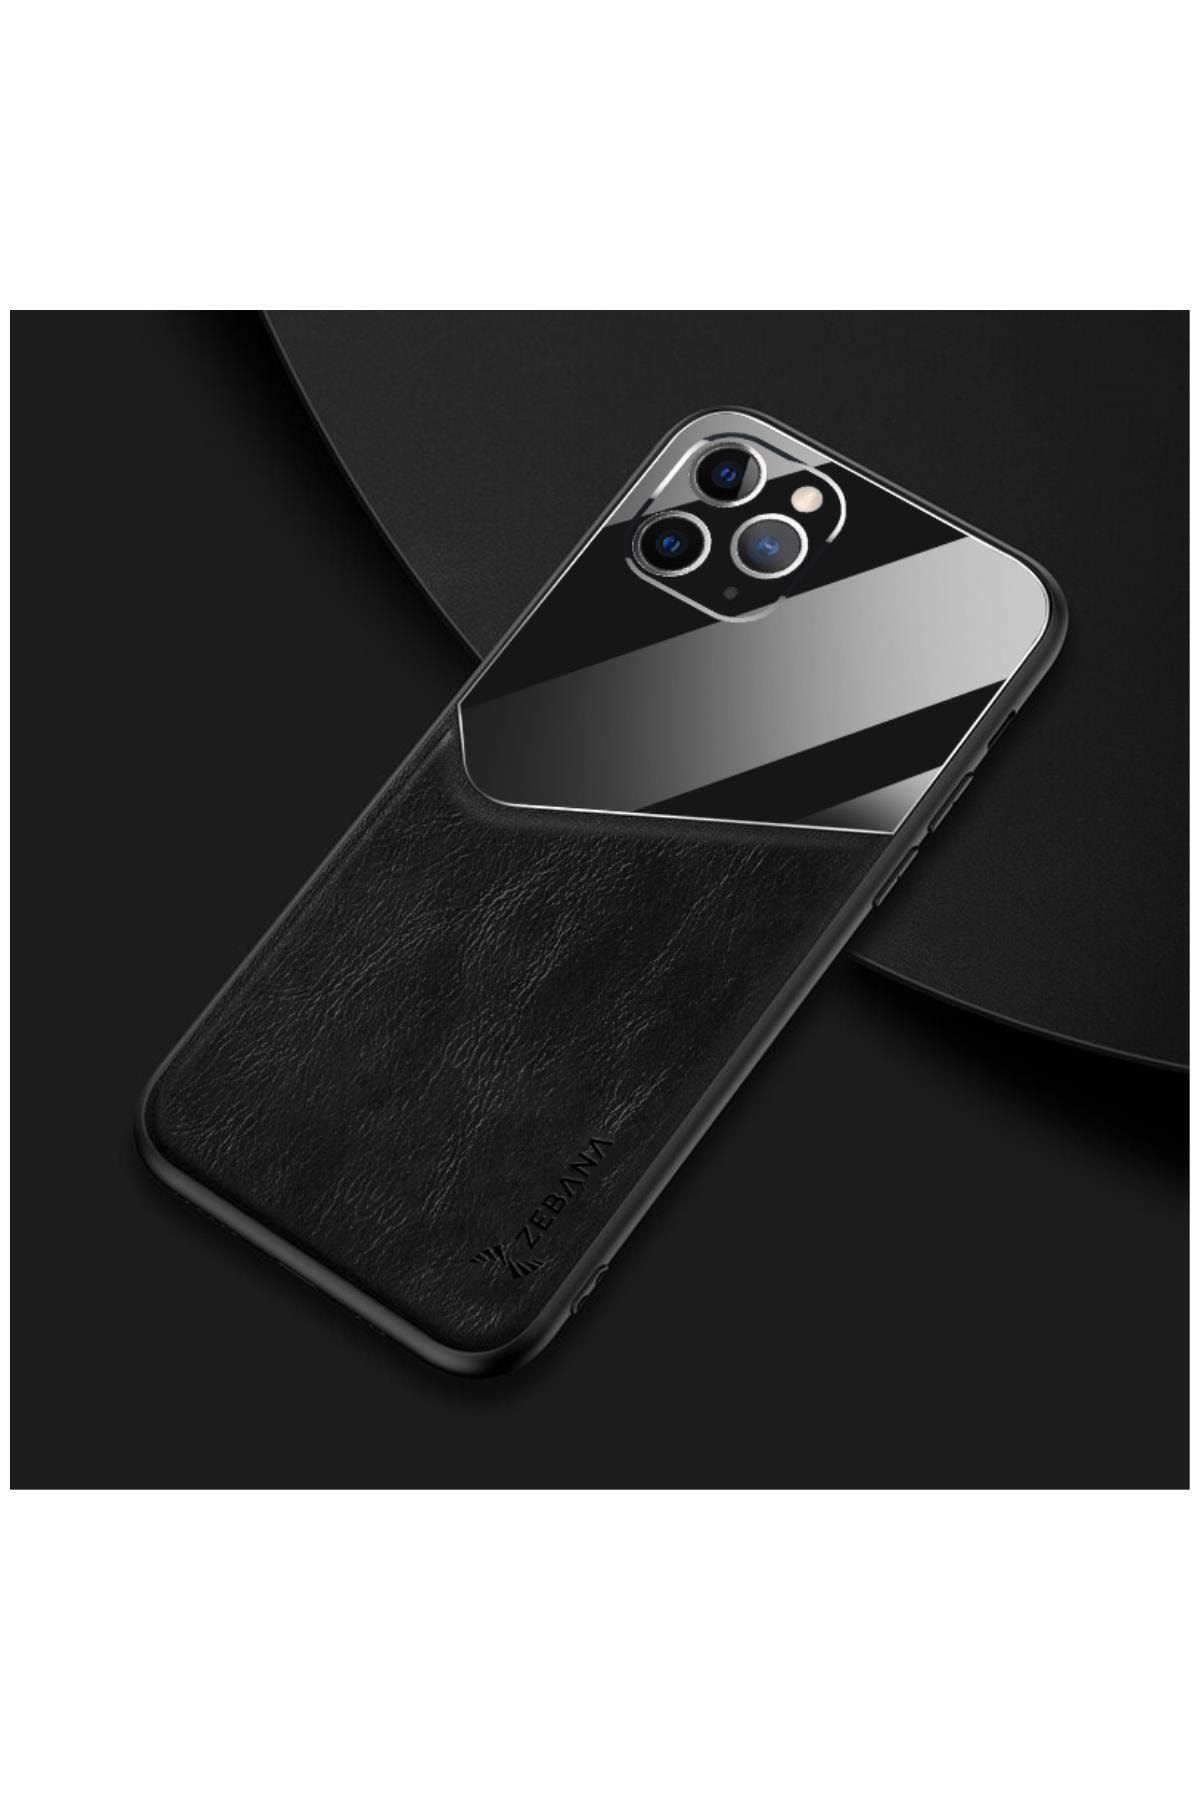 Dara Aksesuar Apple Iphone 11 Pro Max Uyumlu Telefon Kılıfı Zebana New Fashion Deri Kılıf Siyah